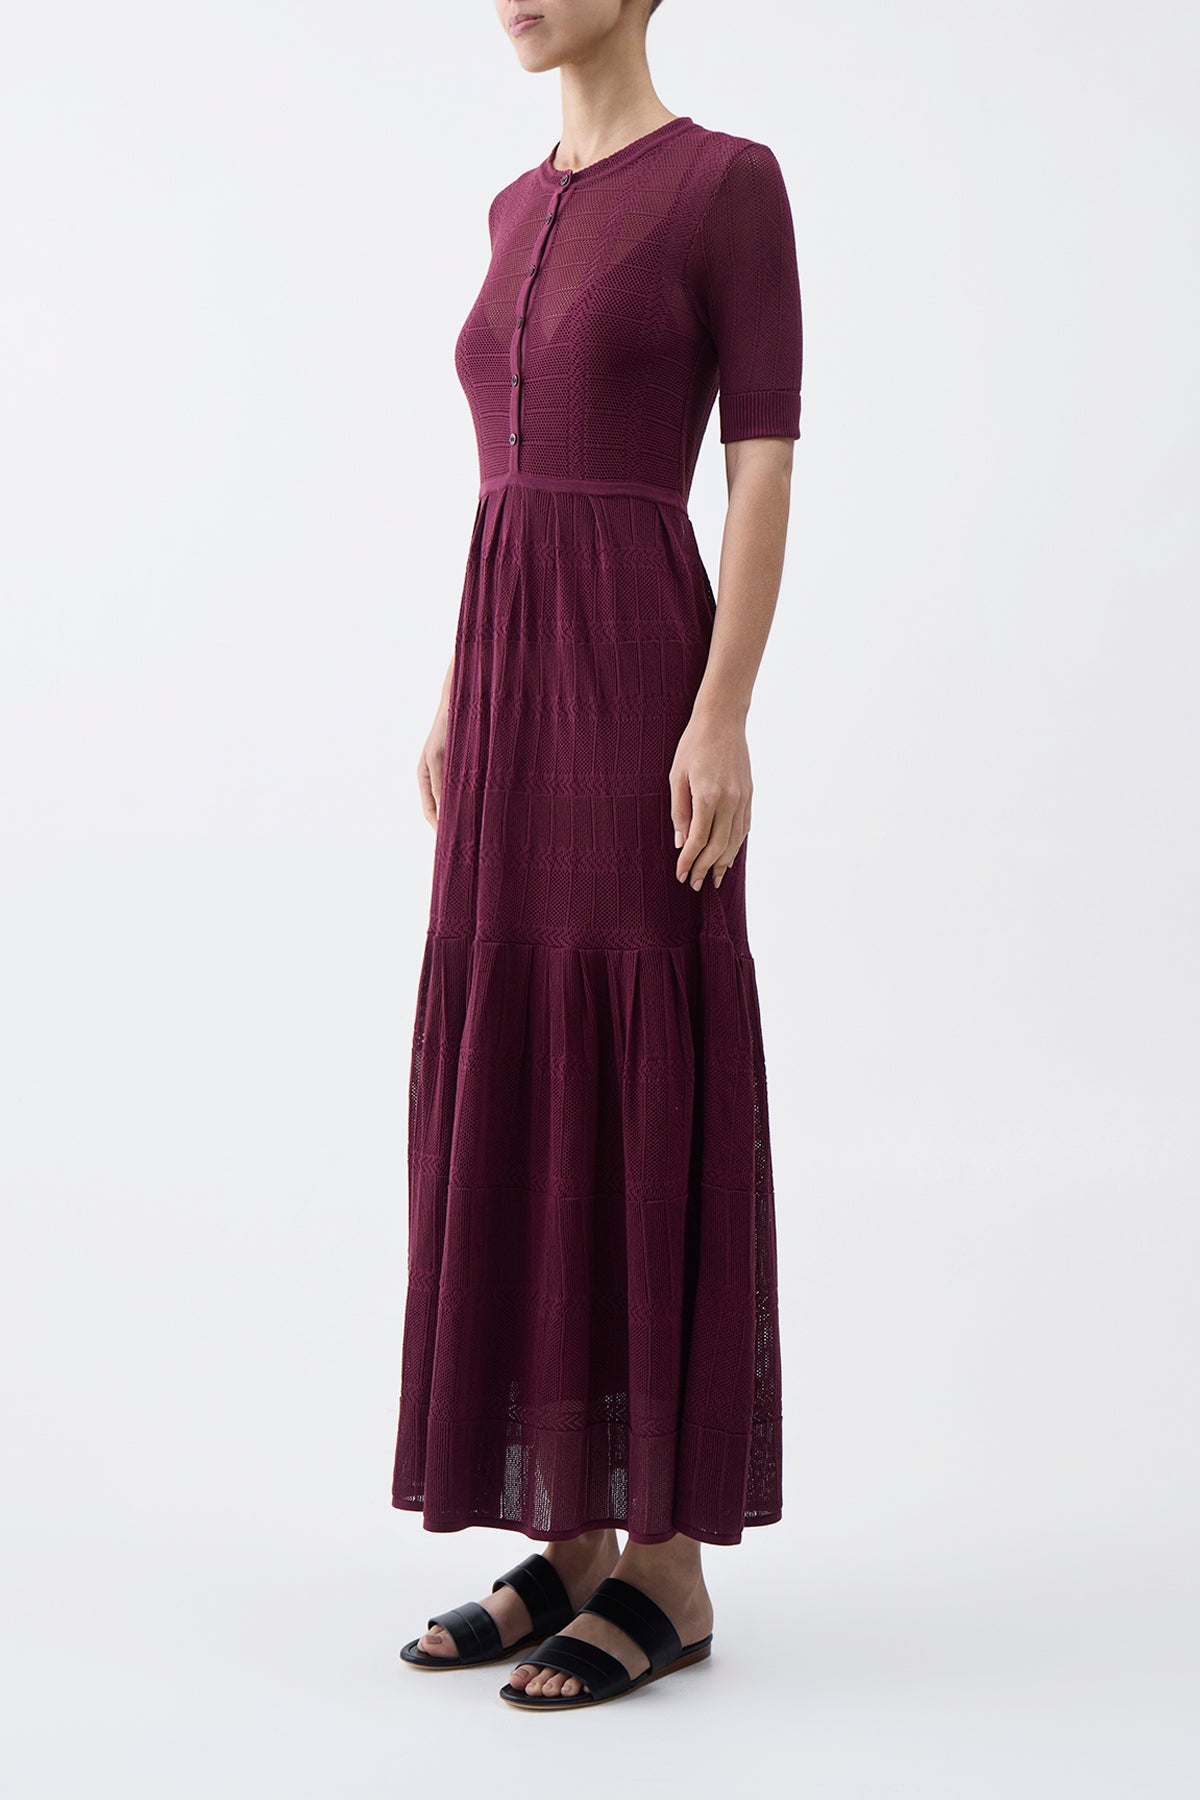 Iris Pointelle Knit Pleated Dress with Slip in Bordeaux Cotton Silk